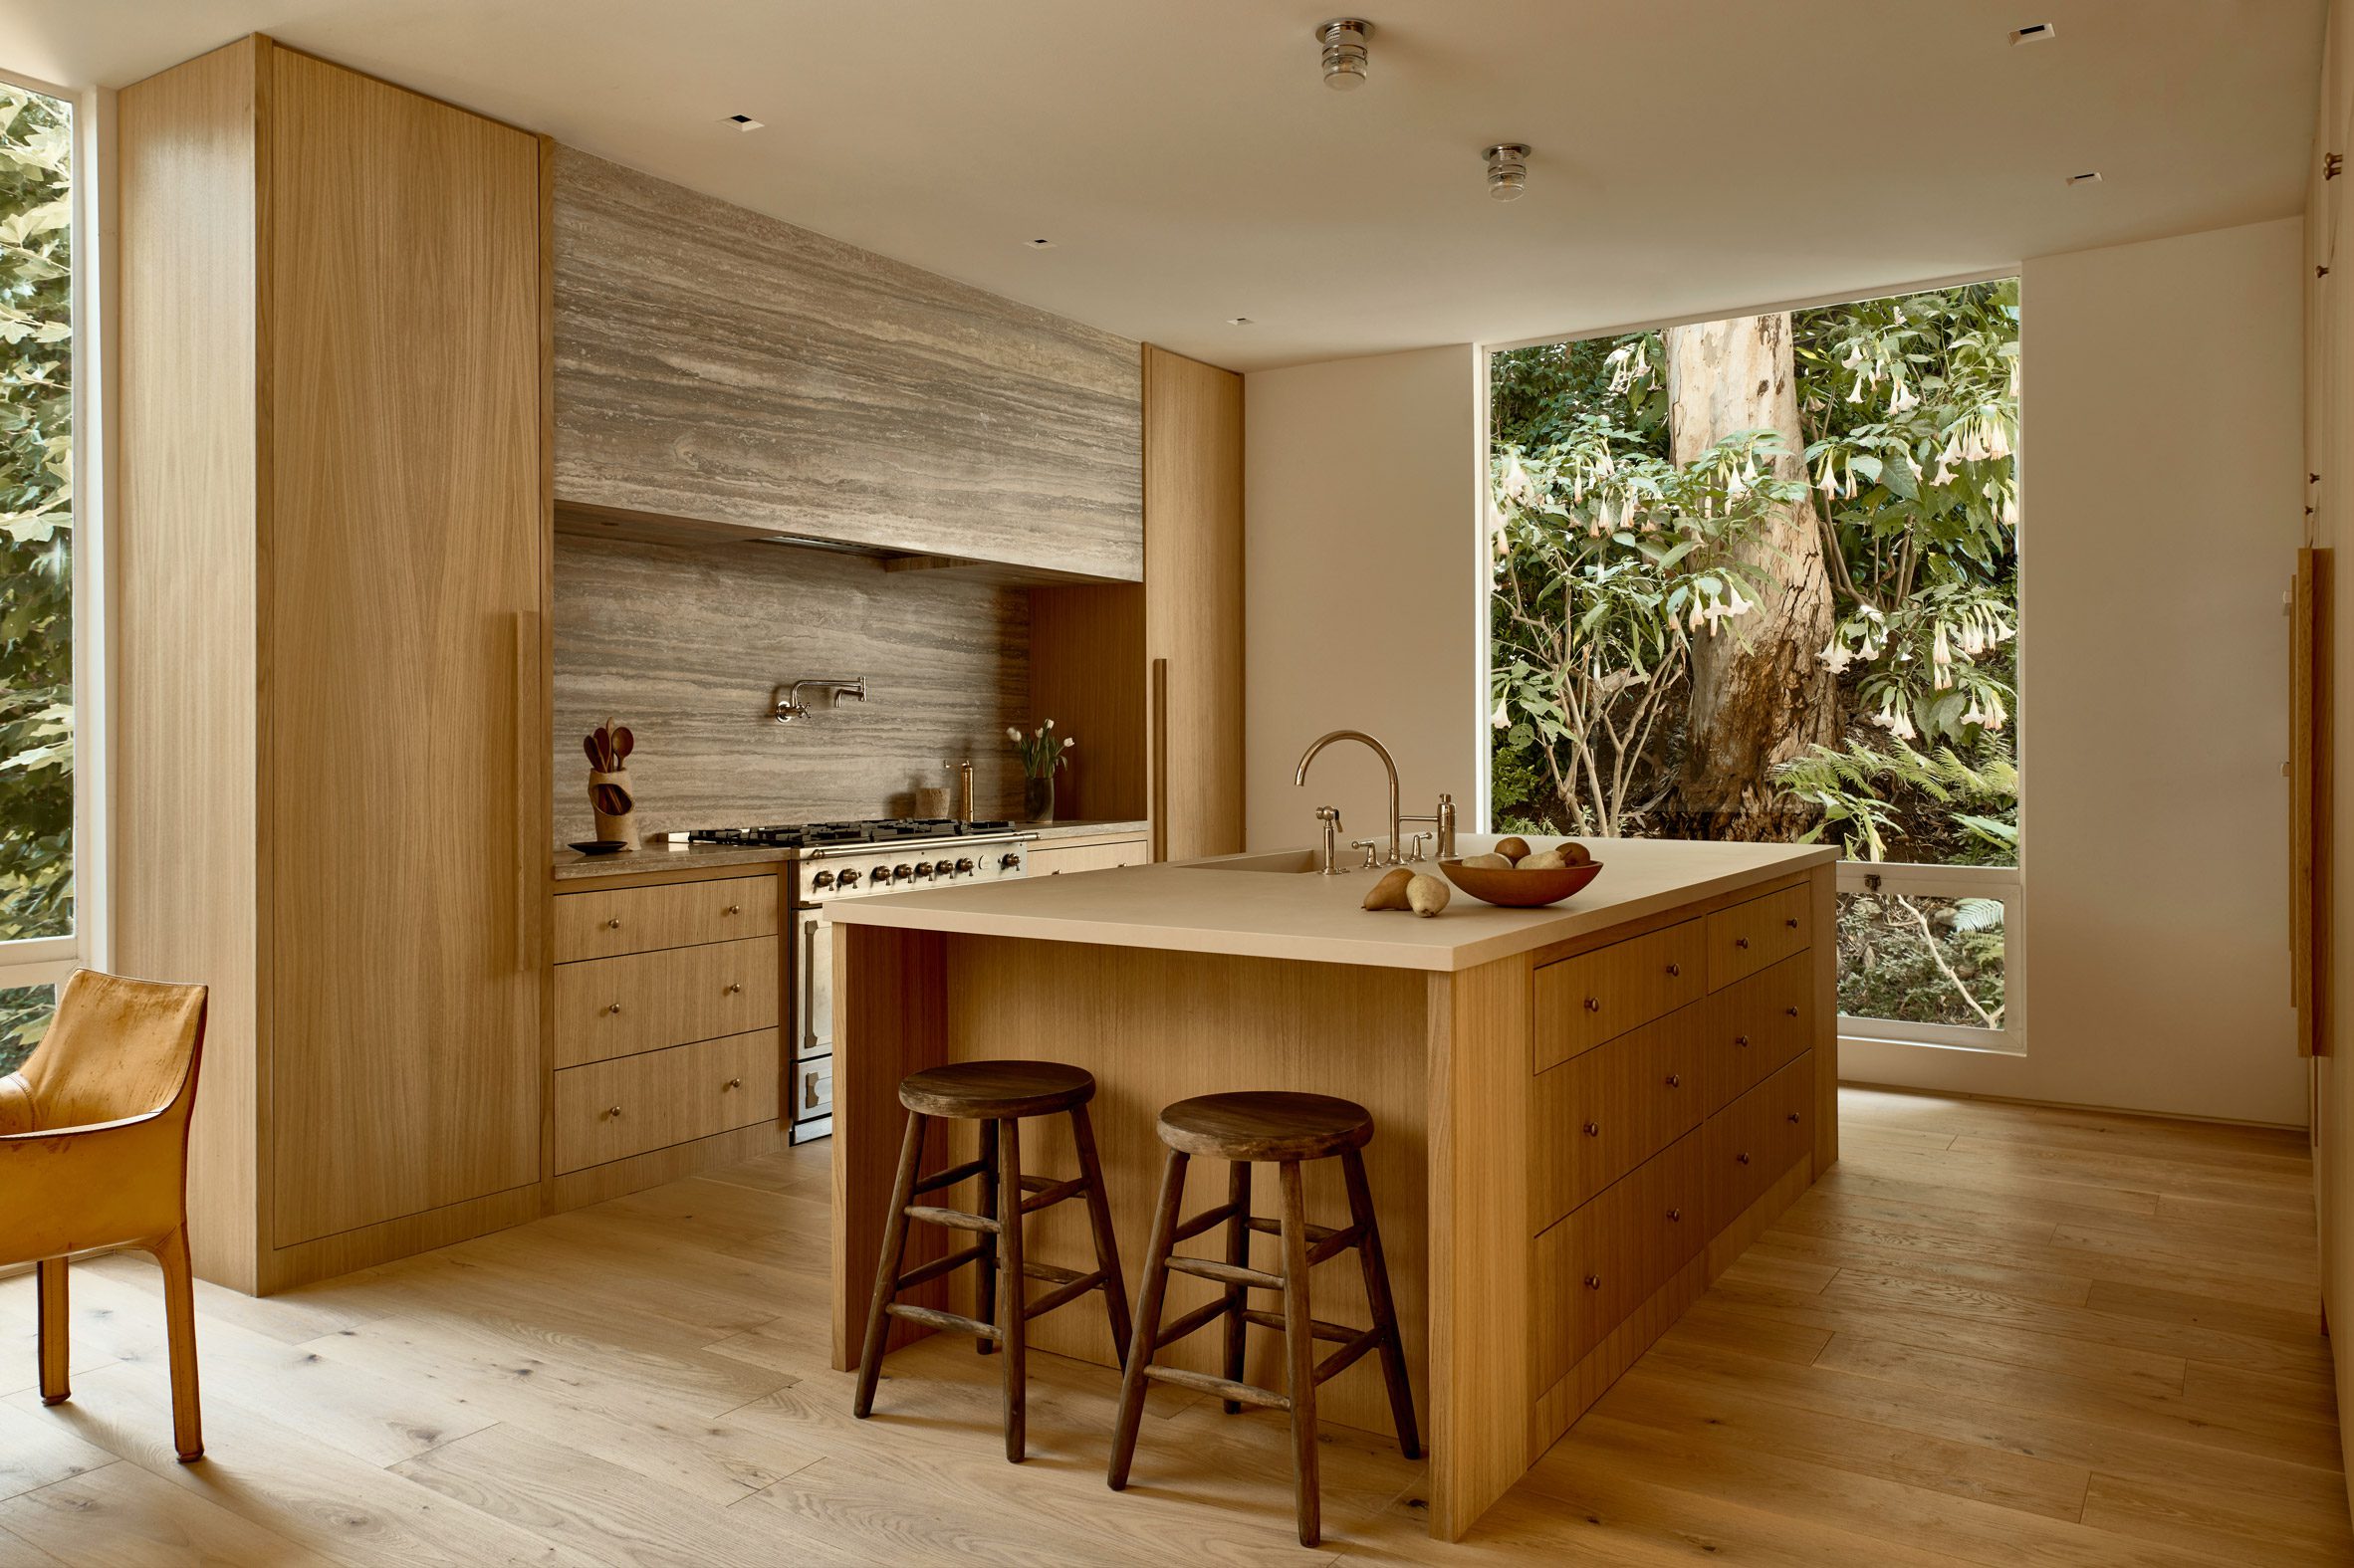 Kitchen with white oak island and cabinetry, and travertine backsplash